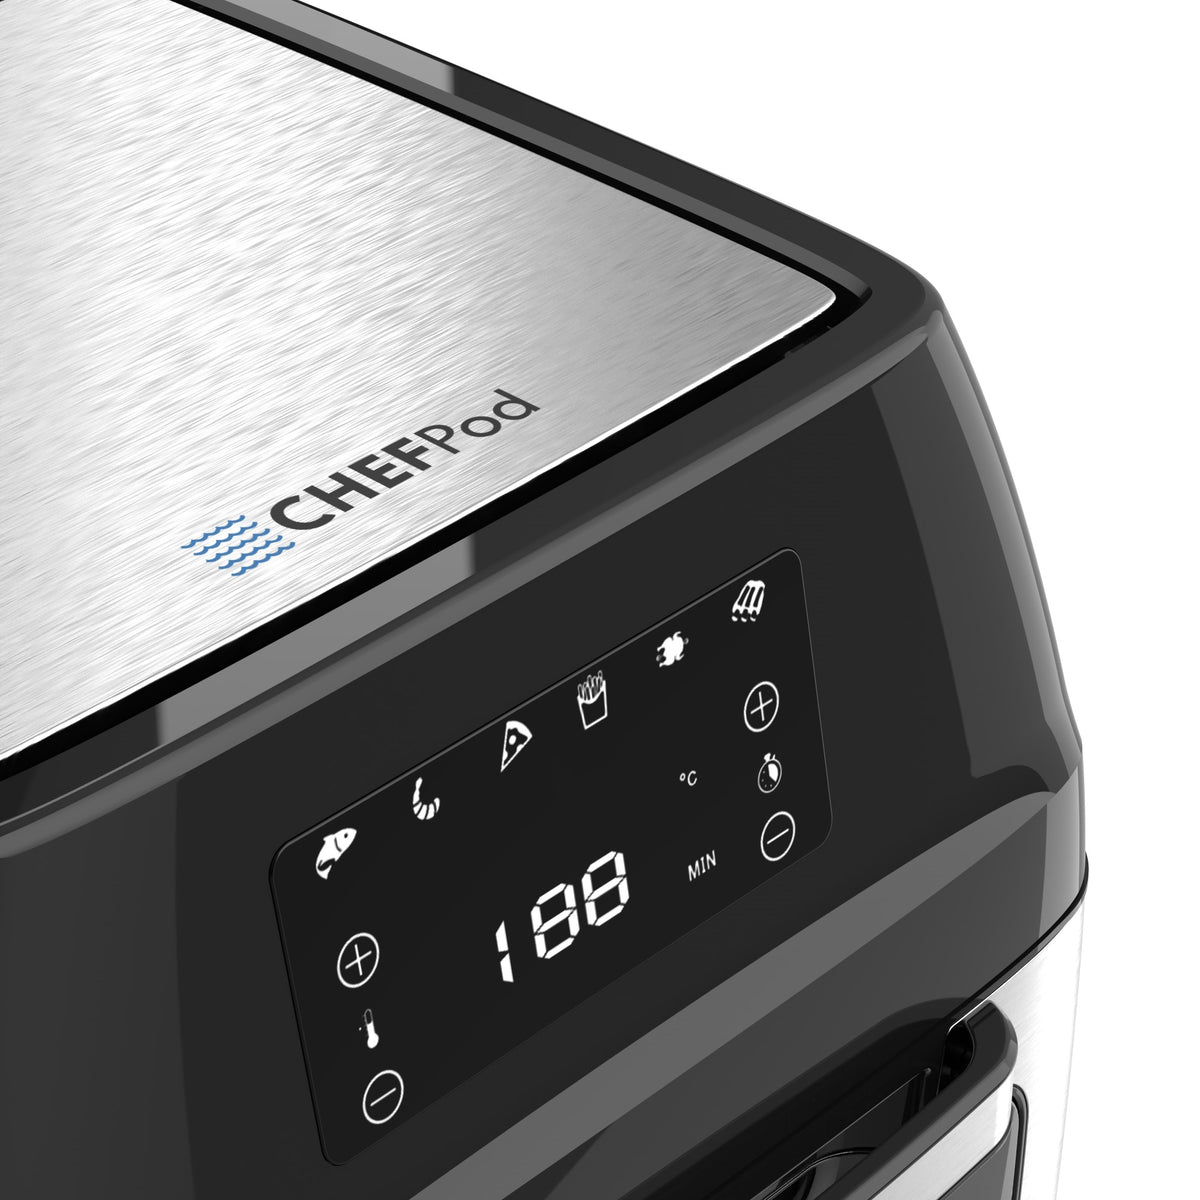 CHEFPod Pro - Air Fryer Oven Digital Touchscreen 13 QT Family Rotisserie Cooker